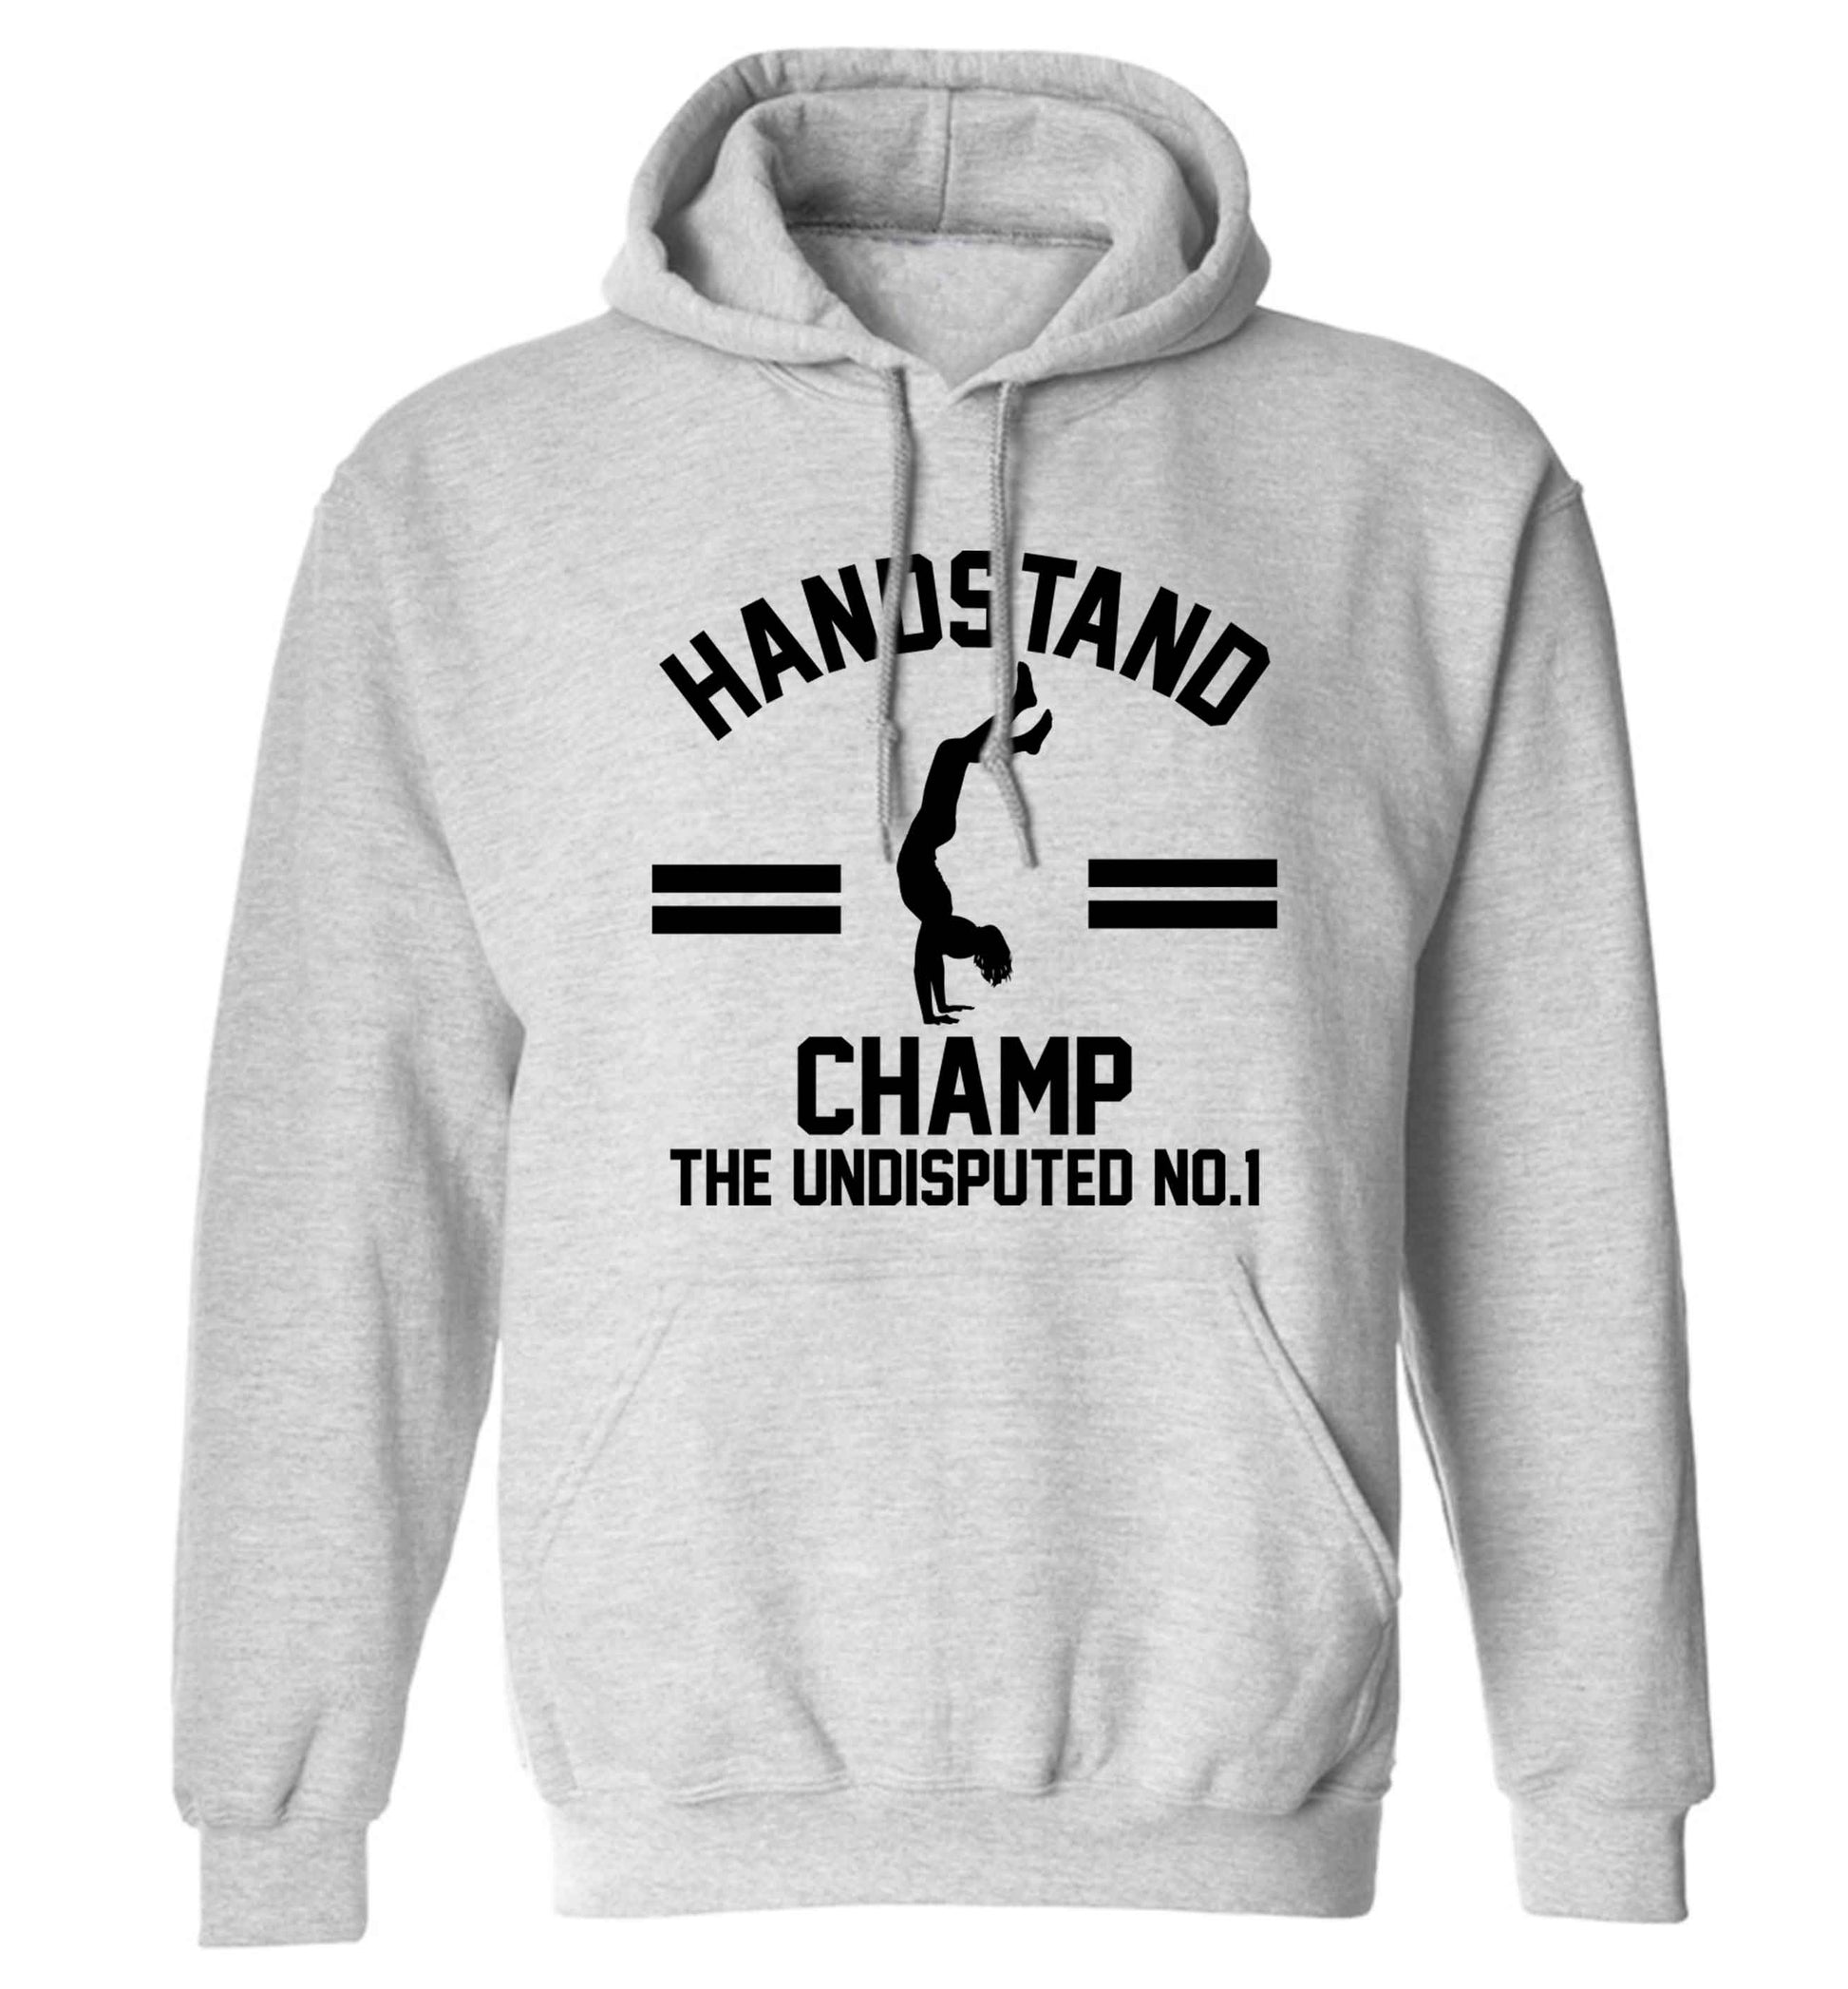 Undisputed handstand championship no.1  adults unisex grey hoodie 2XL